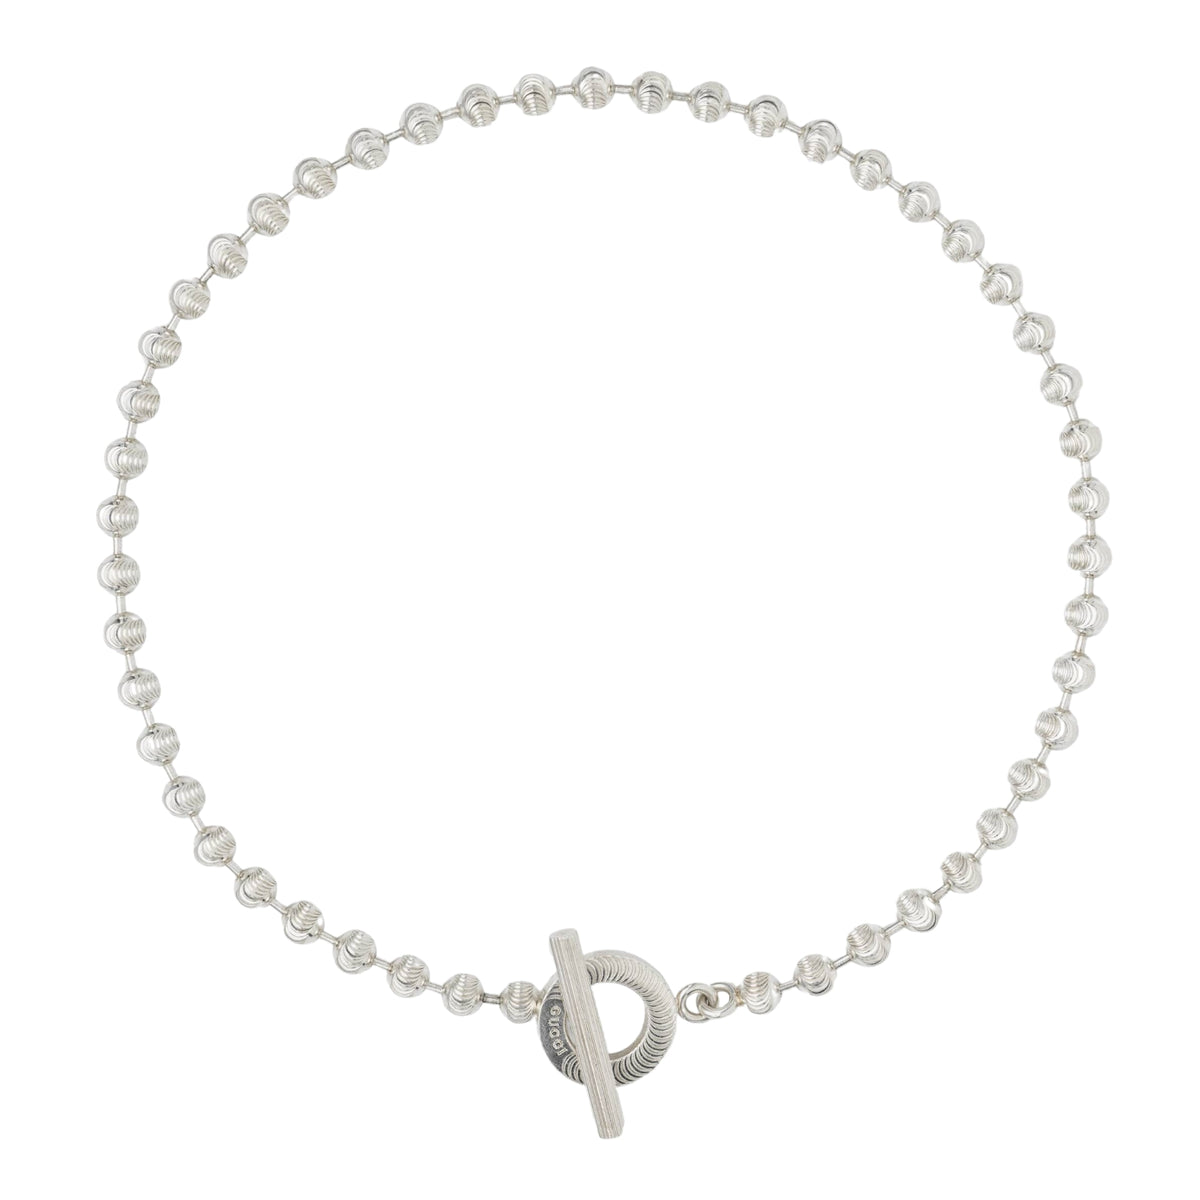 Gucci Boule Choker Necklace in Sterling Silver - Orsini Jewellers NZ